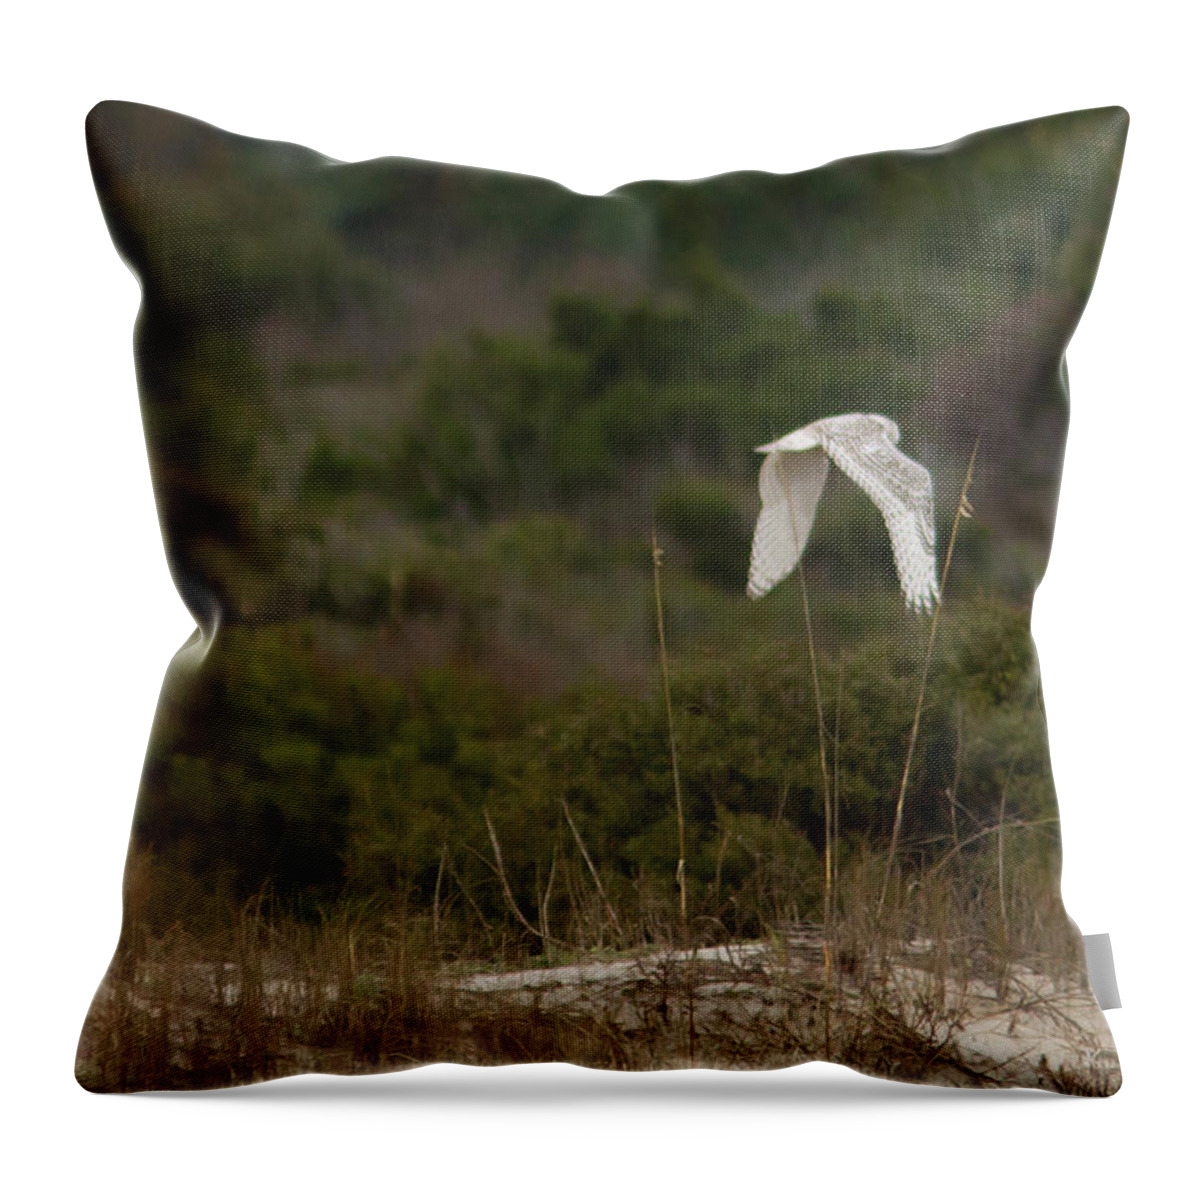 Snowy Owl Throw Pillow featuring the photograph Snowy Owl Dune Flight by Paul Rebmann